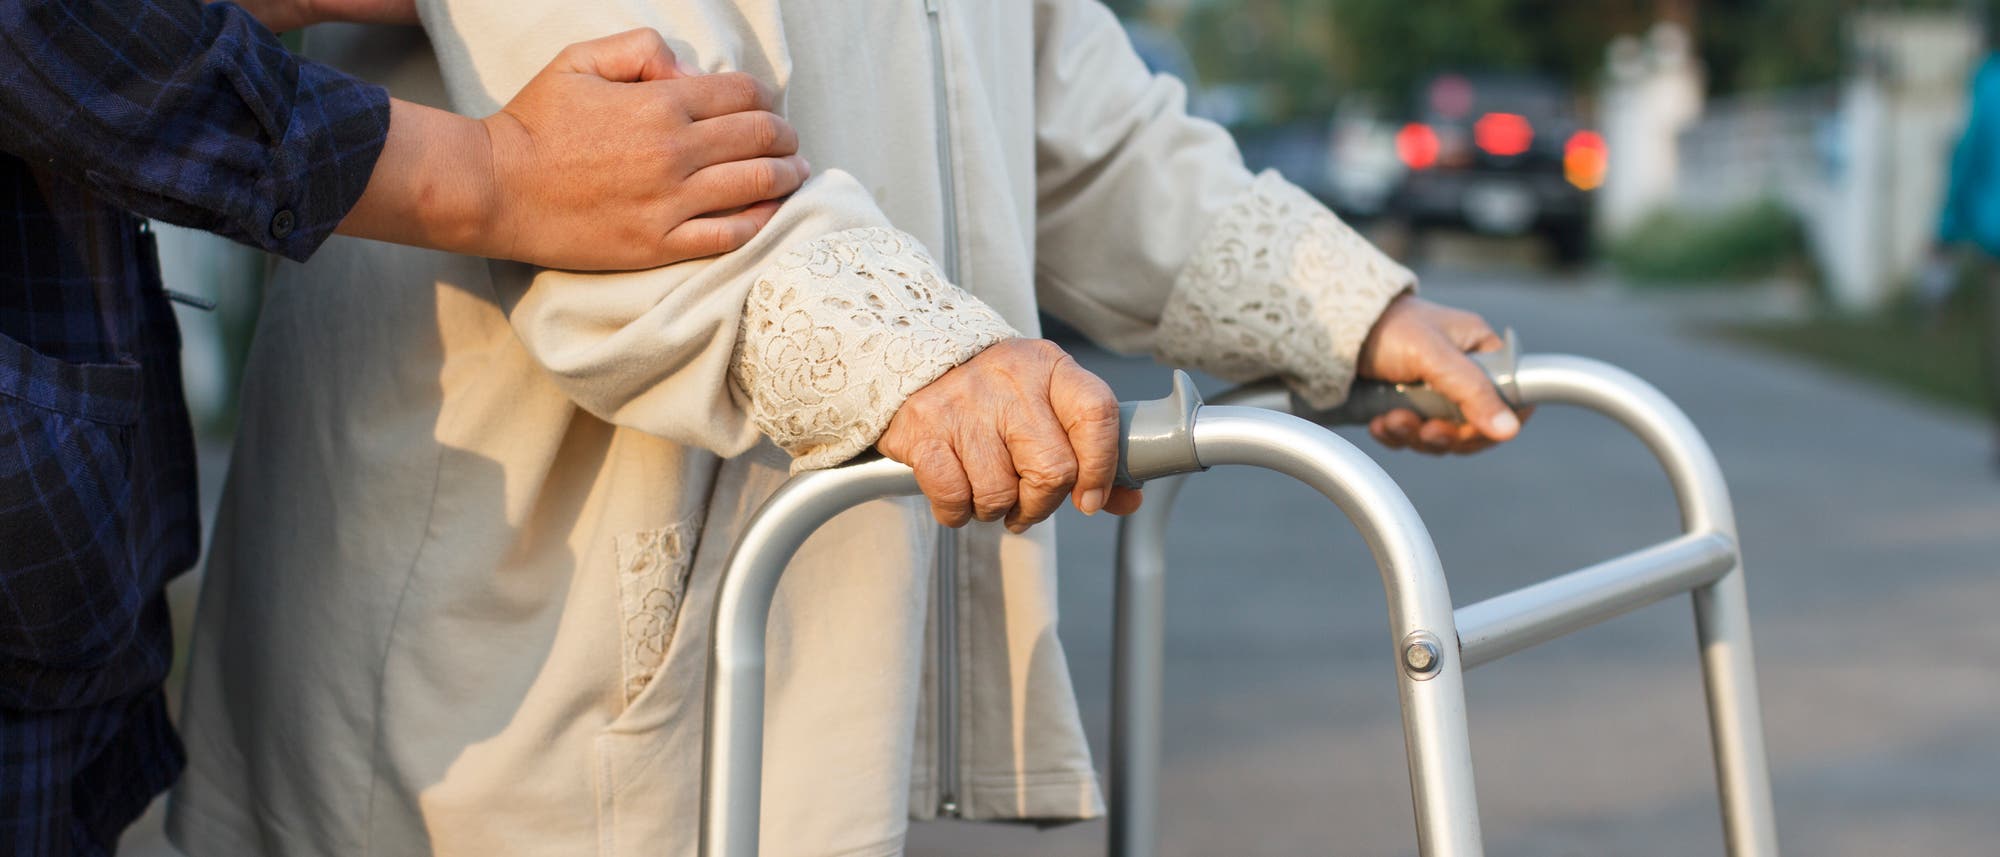 Frau hilft älterer Frau über die Straße